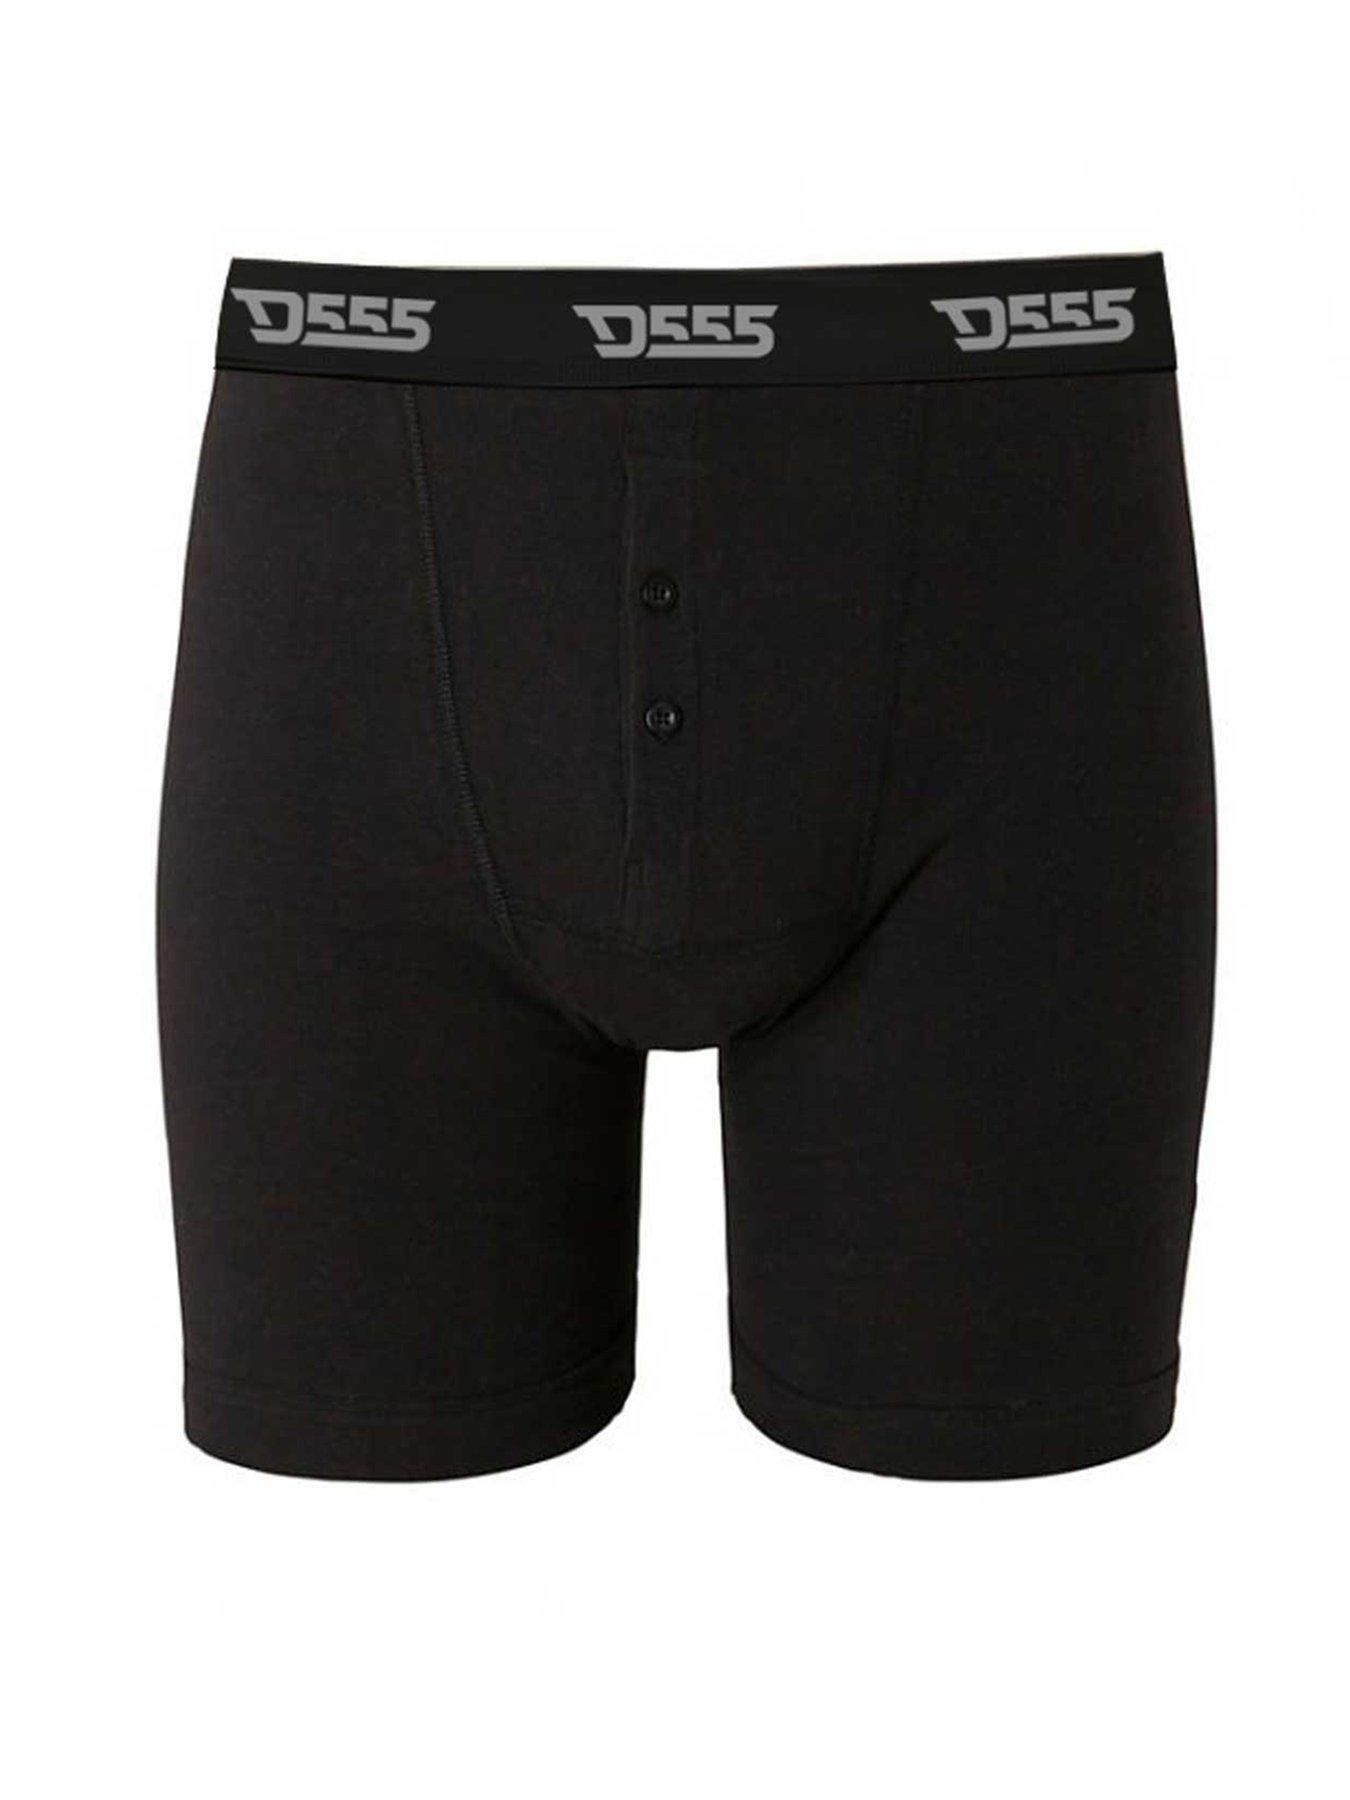 D555 Cotton Boxer Shorts (3 Pack) - Black | very.co.uk